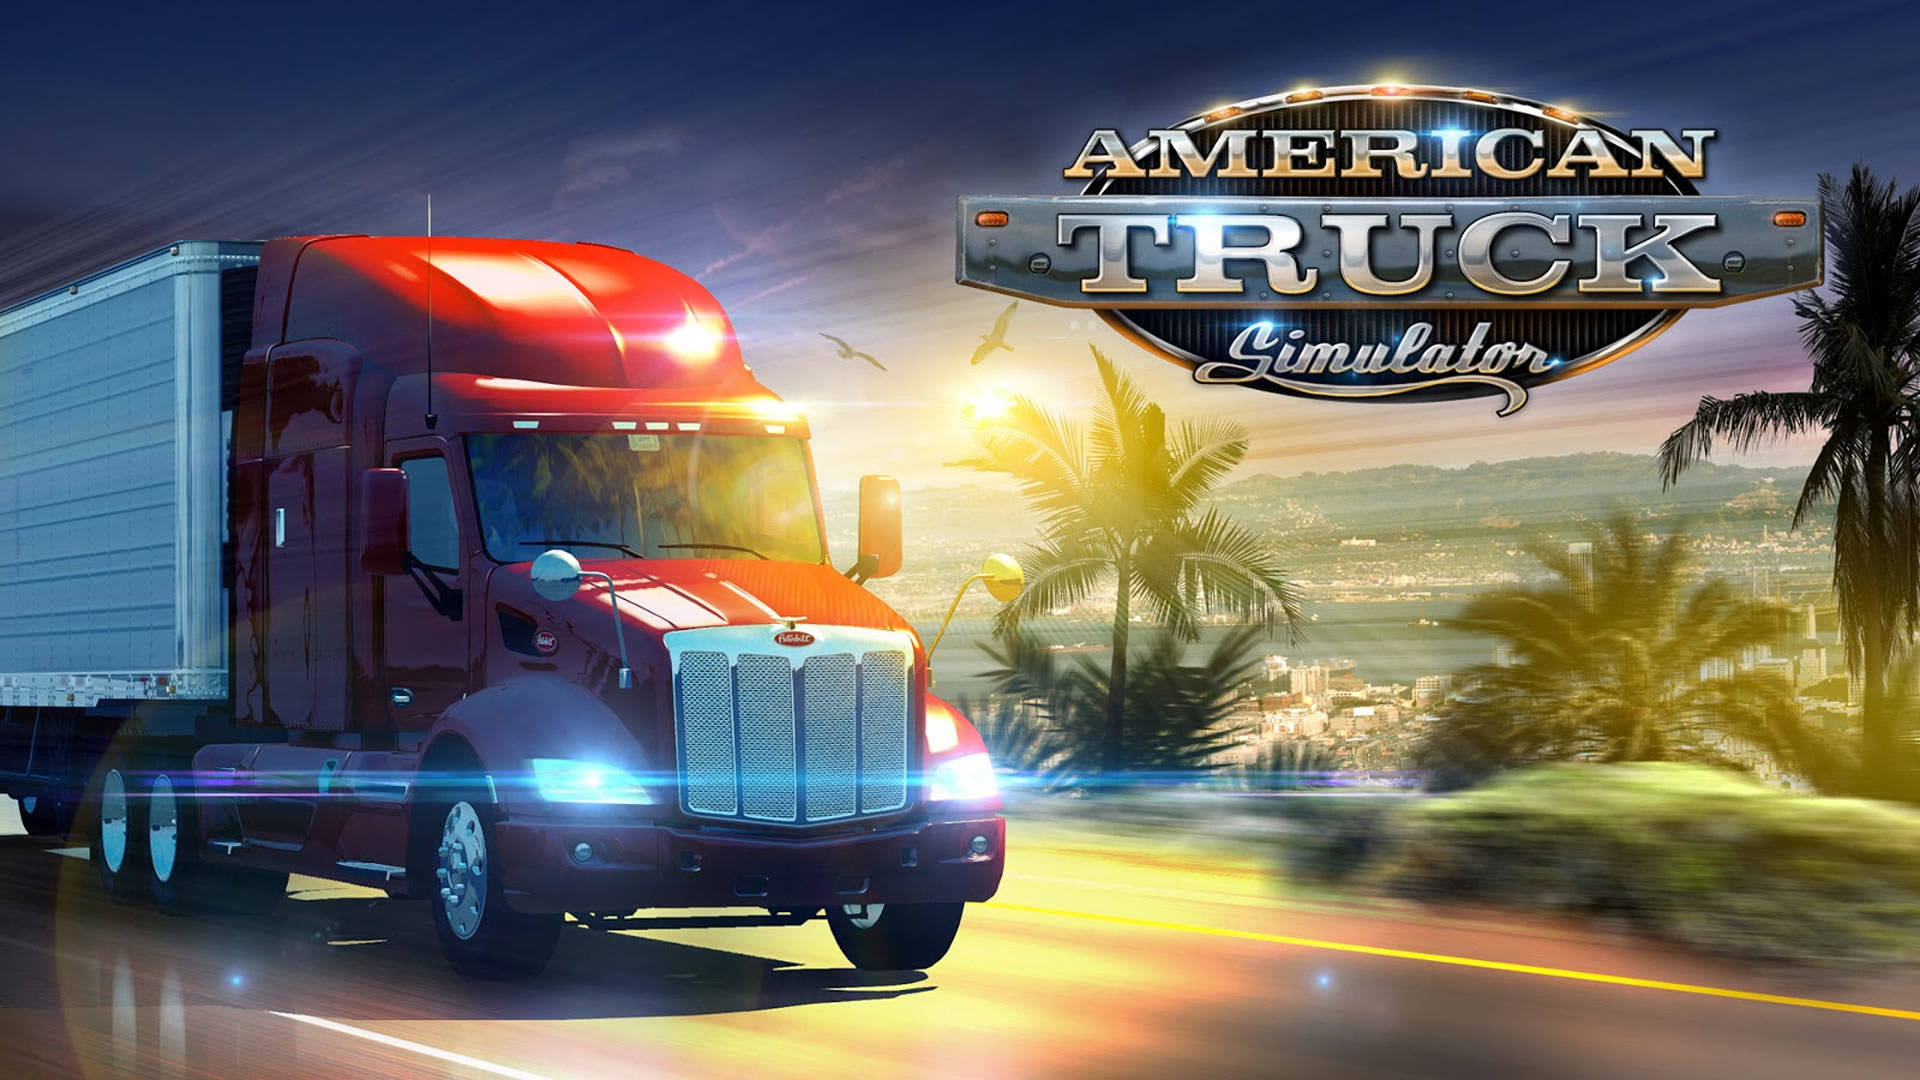 American Truck Simulator Glossy Red Truck Background